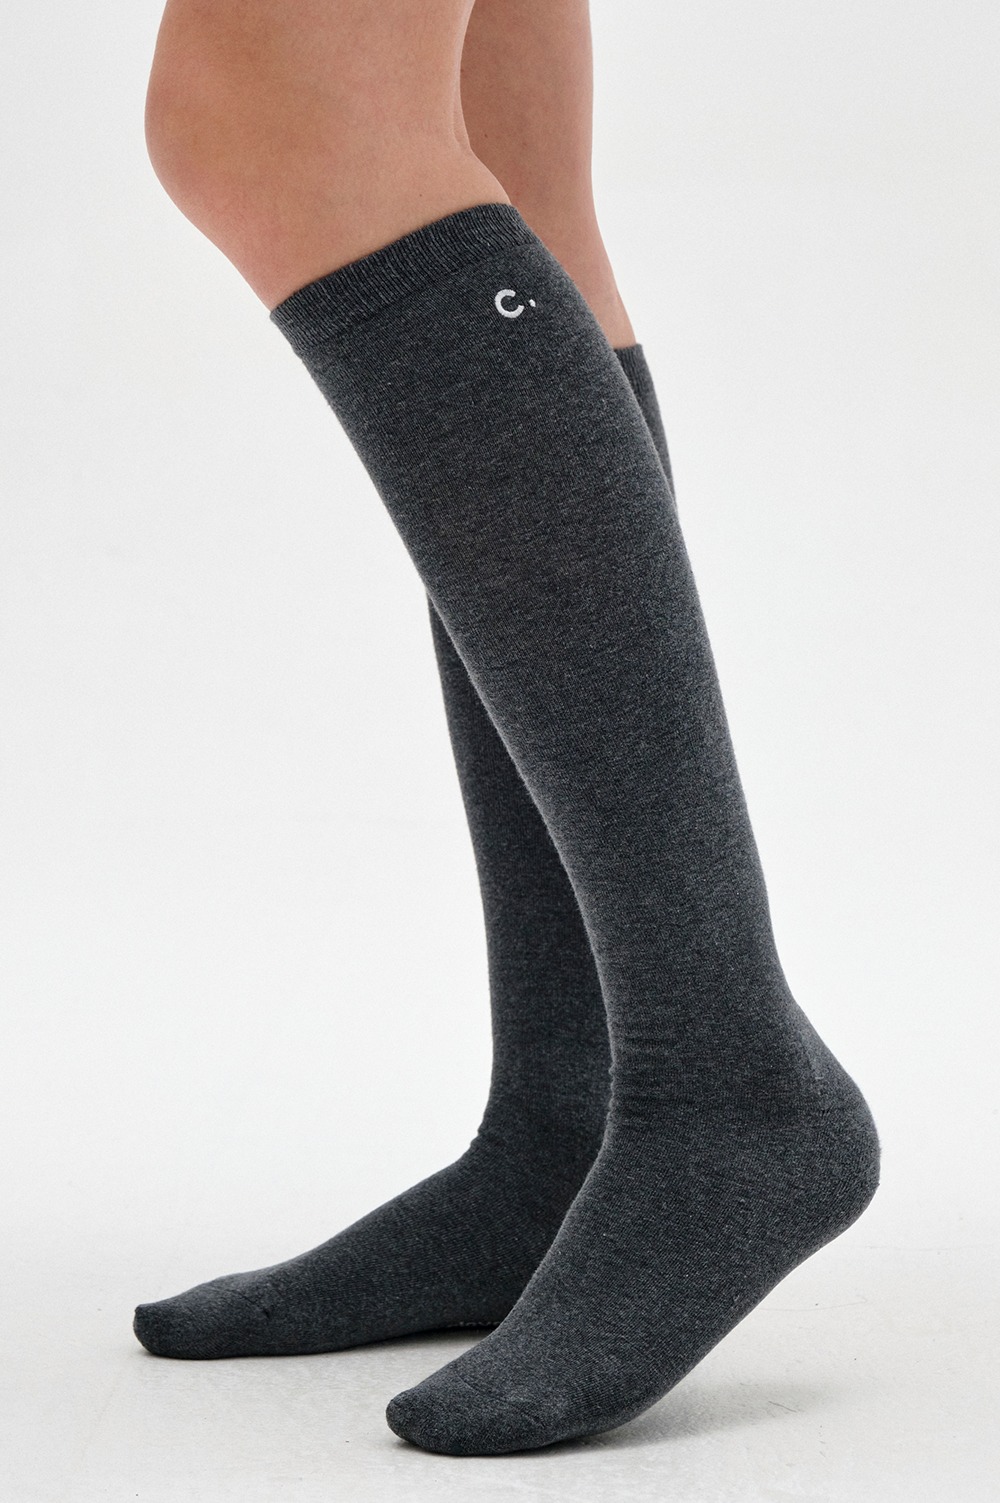 clove - Logo Knee Socks (Charcoal)